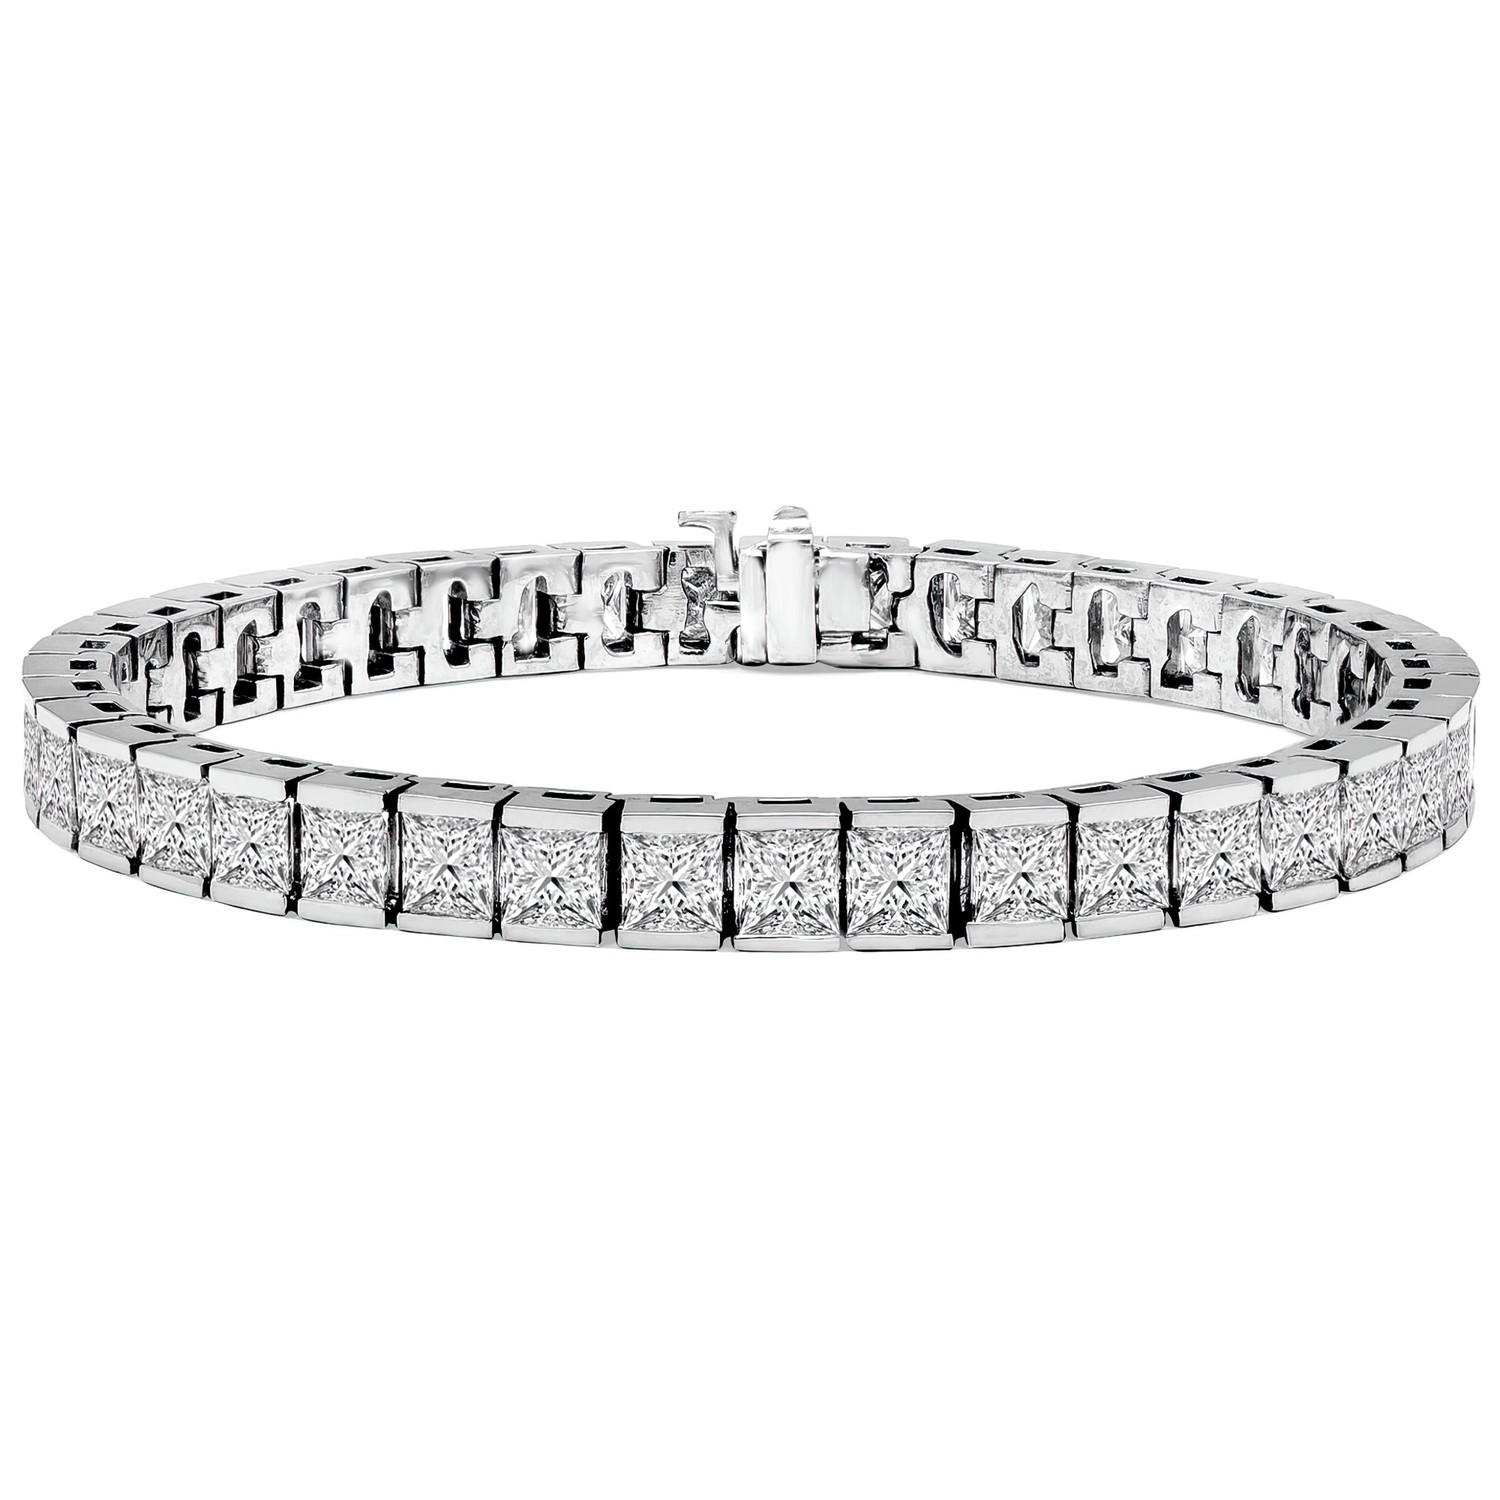 Neiman Marcus Diamonds 18K White Gold Princess Diamond Bracelet, 7